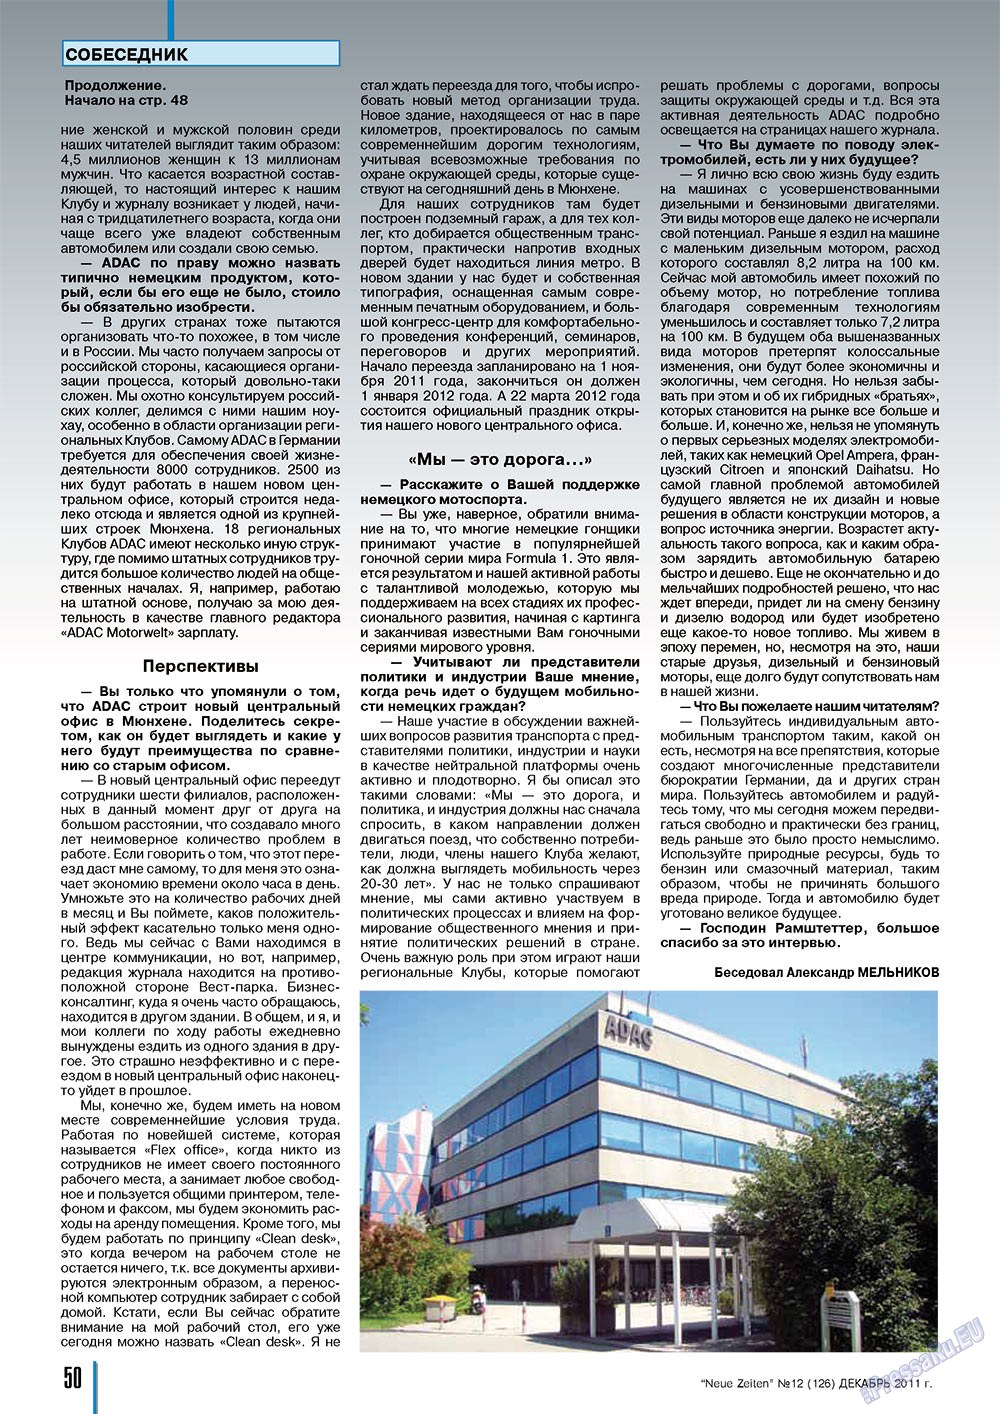 Neue Zeiten (журнал). 2011 год, номер 12, стр. 50